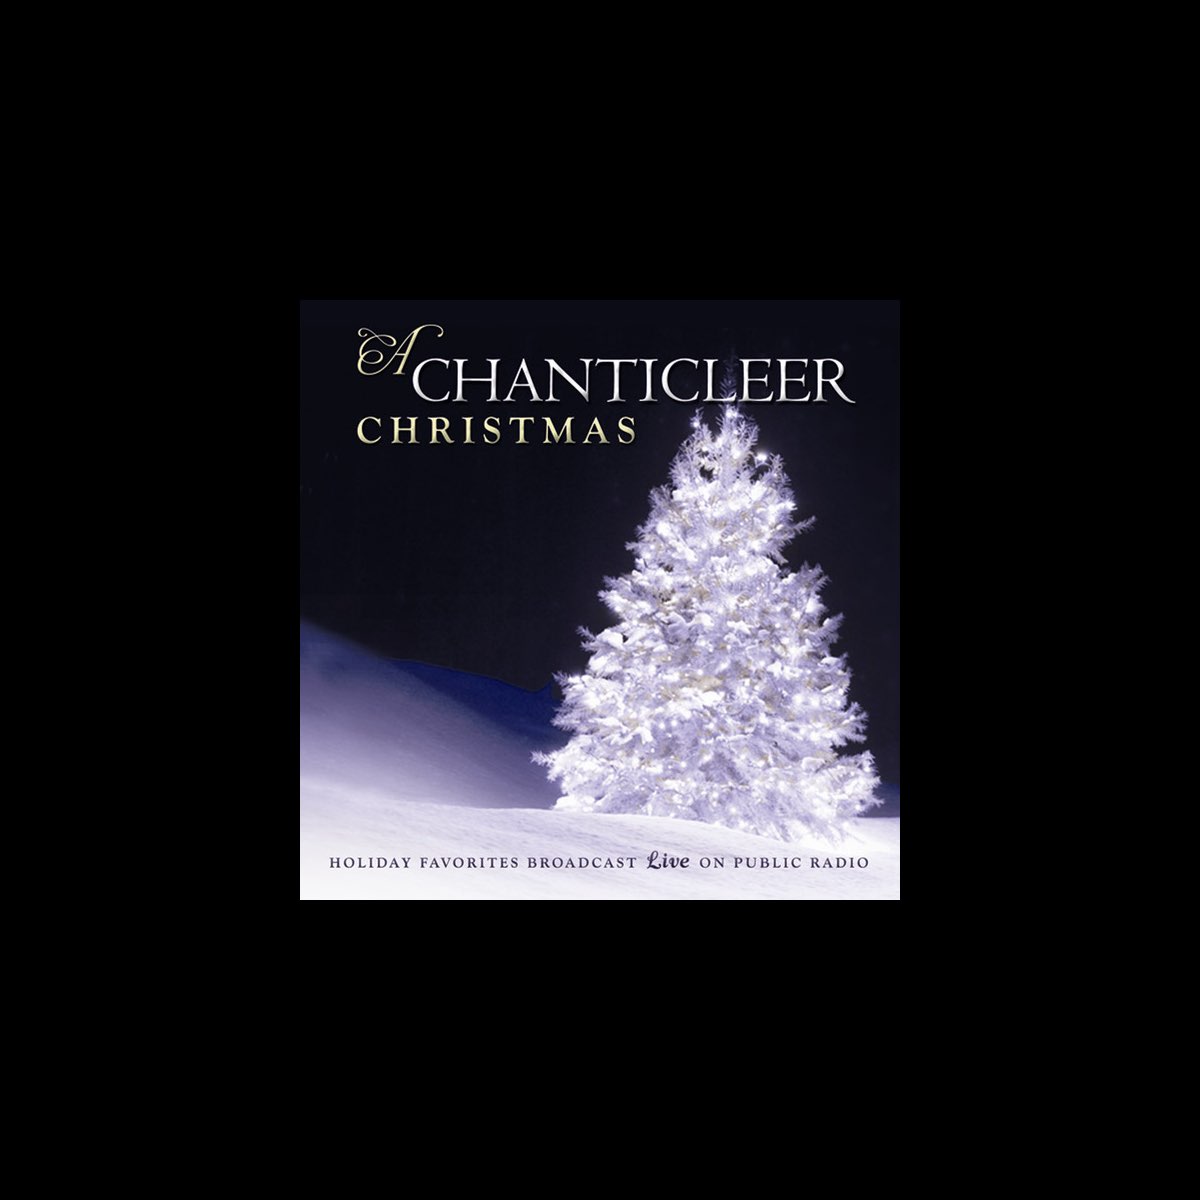 ‎A Chanticleer Christmas by Chanticleer on Apple Music